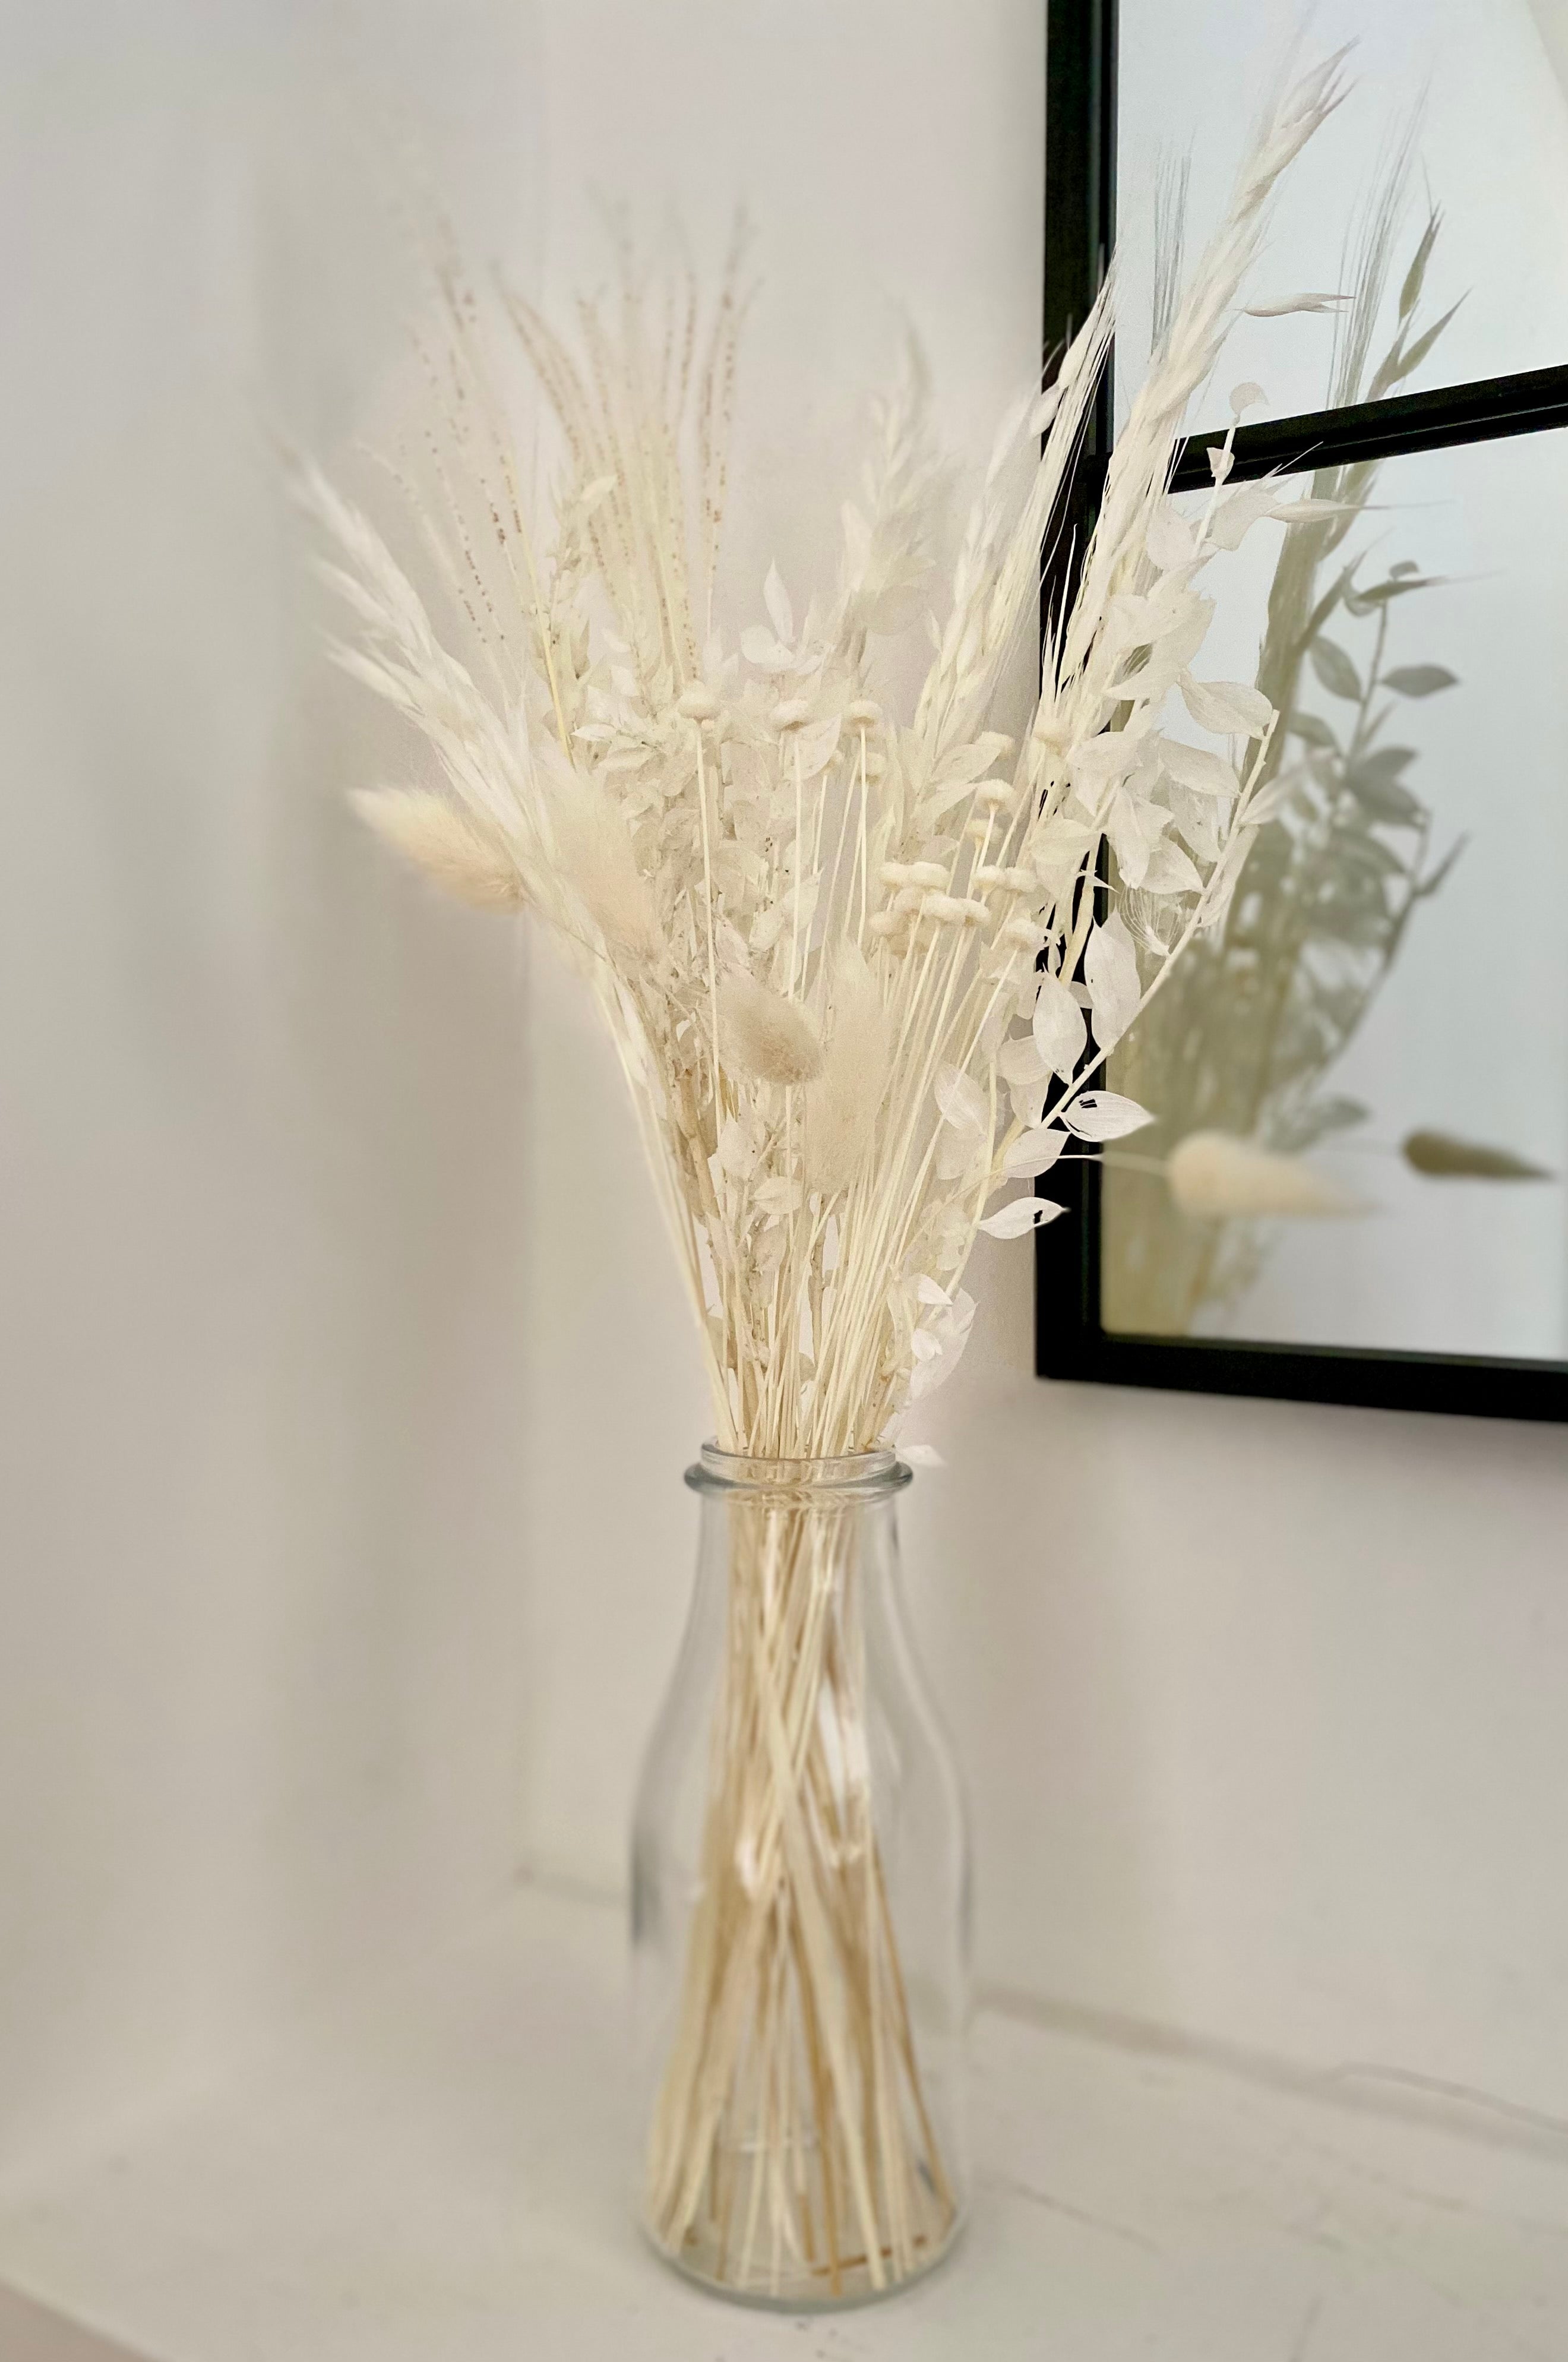 Dried flower bouquet in white